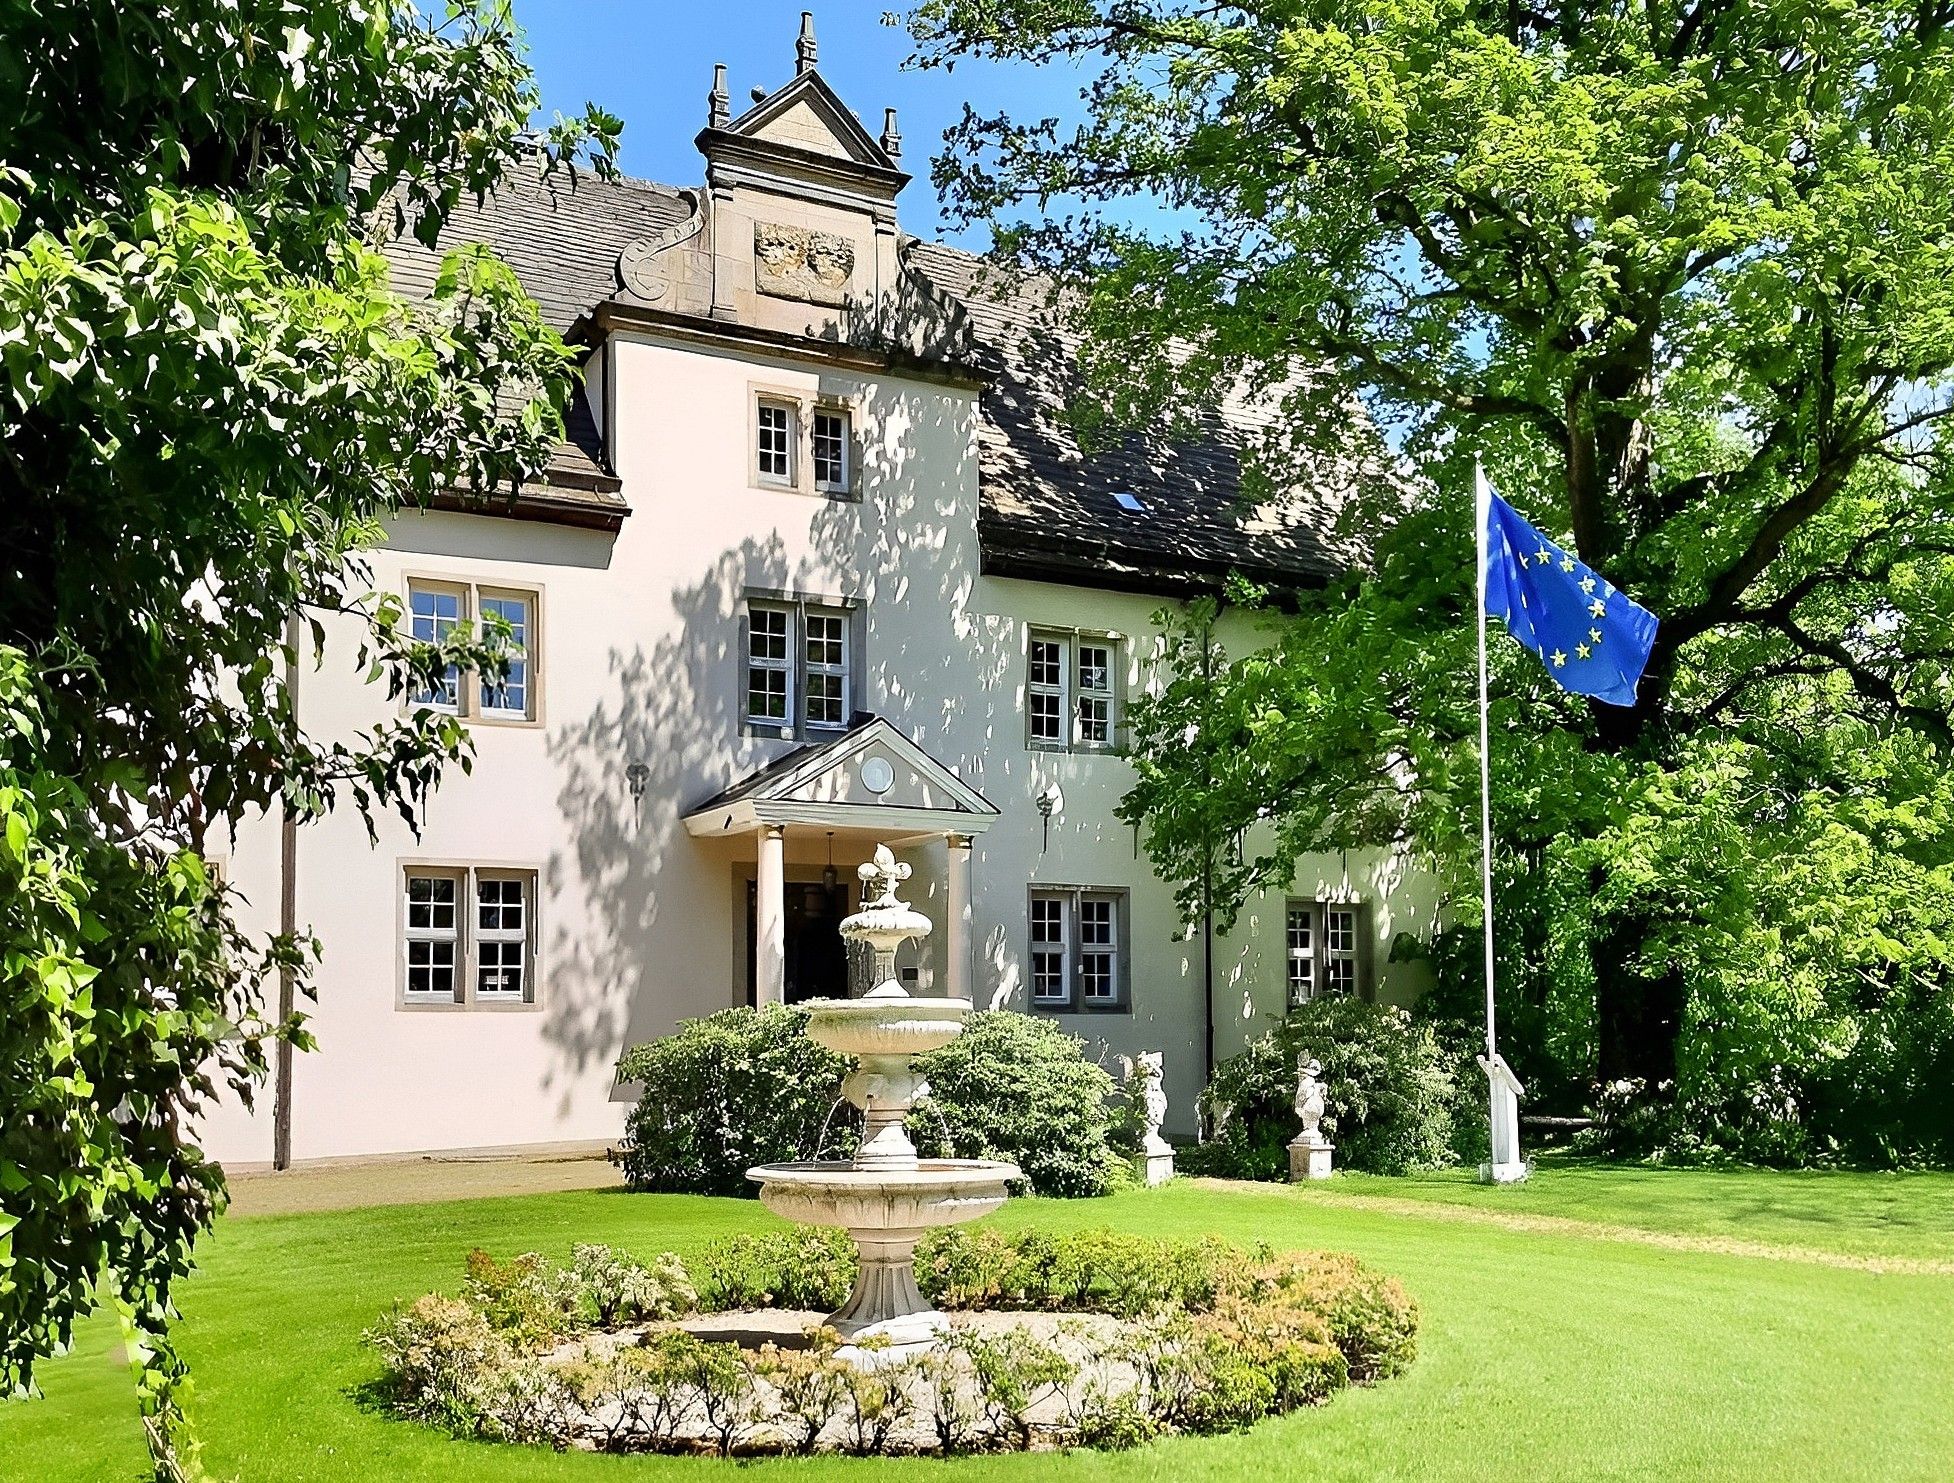 Castle for sale 32683 Barntrup, North Rhine-Westphalia, Exterior View